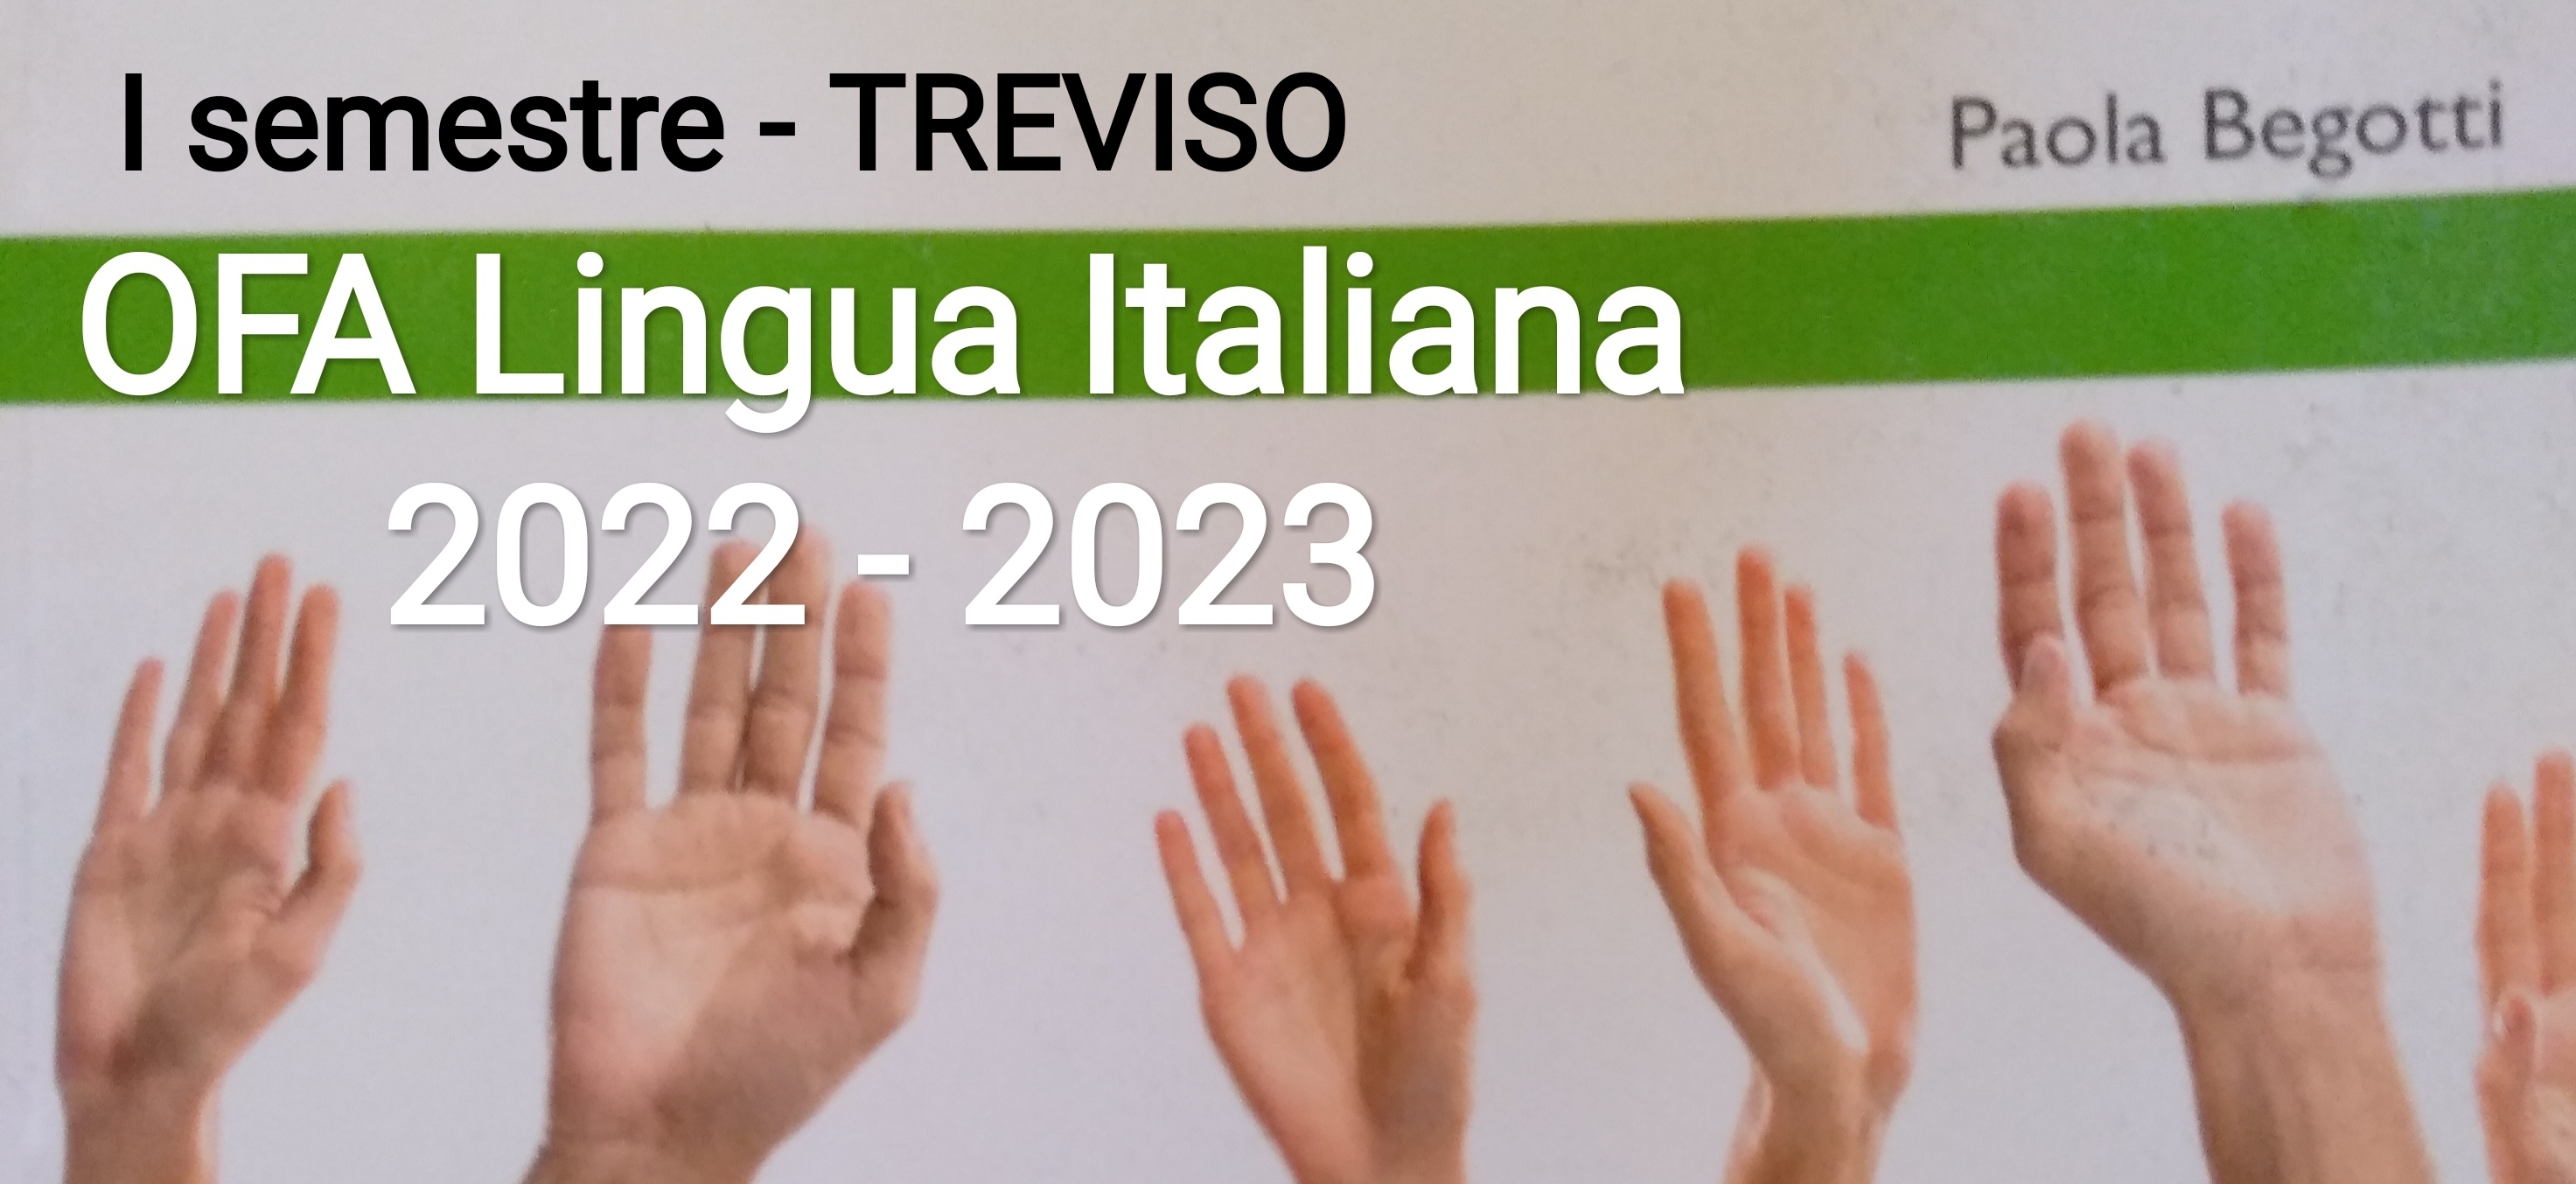 [LT0001] OFA - LINGUA ITALIANA (LT5) - a.a. 2022-23 - I semestre a Treviso